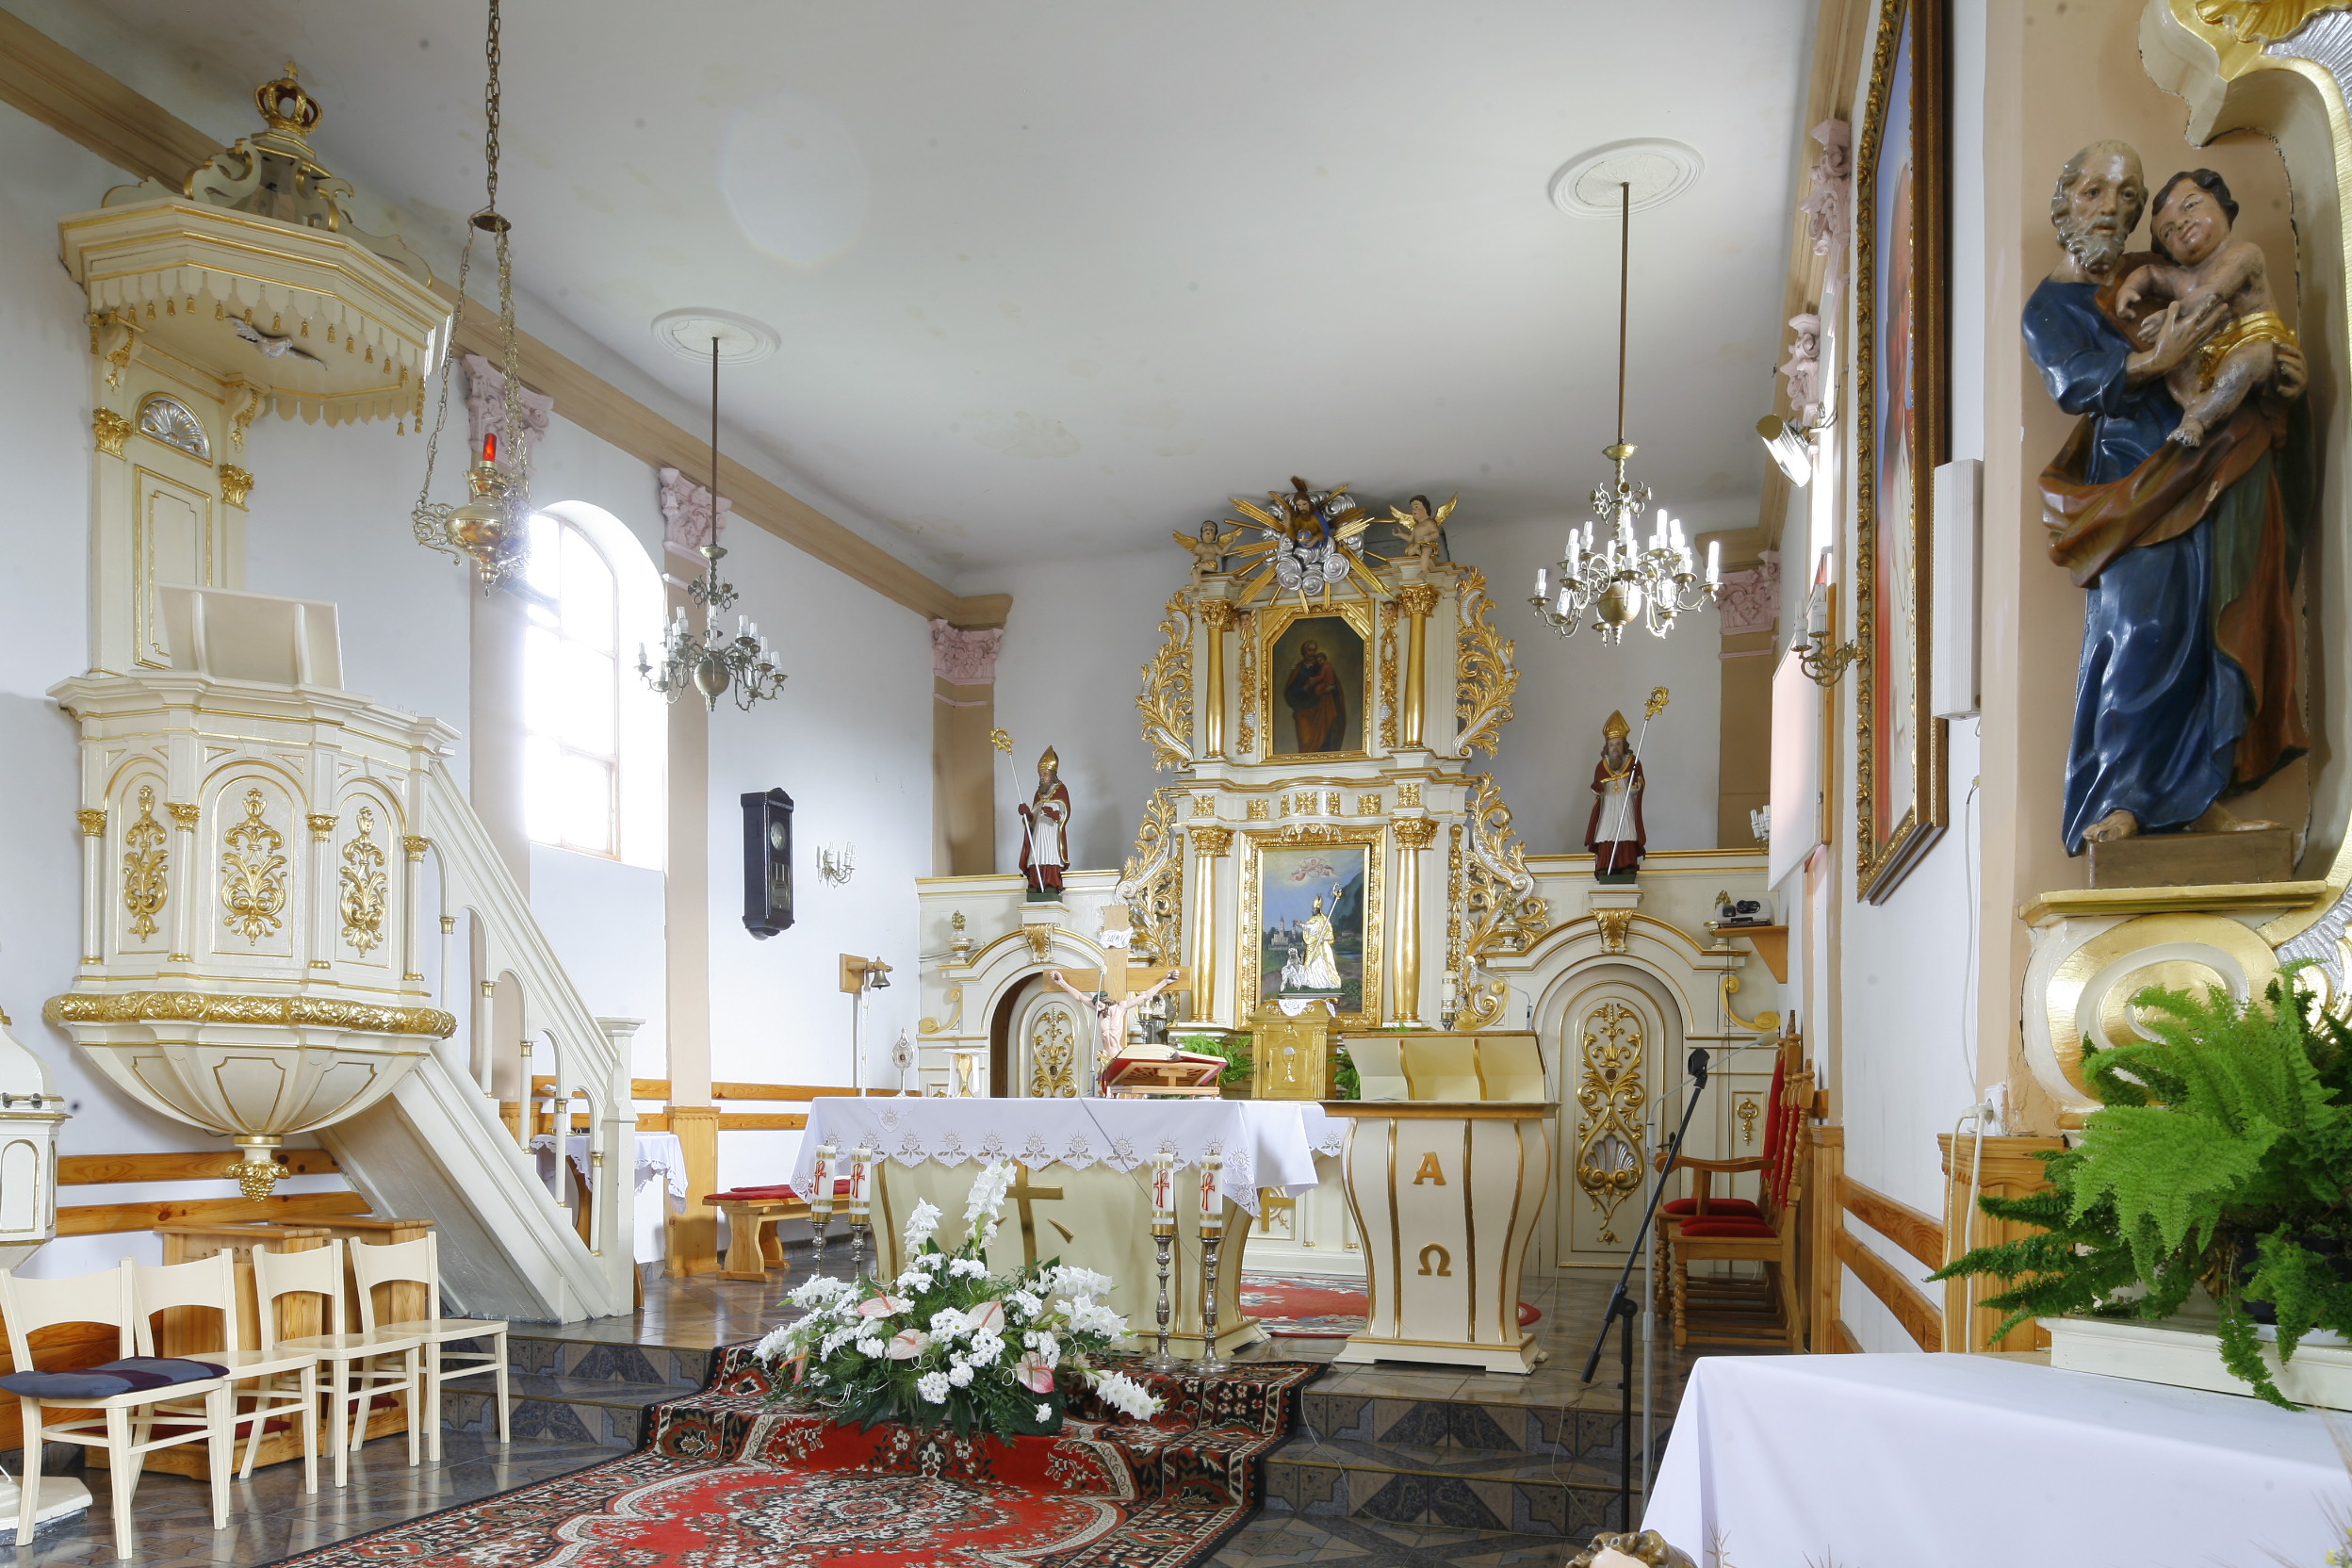 St Stanislaus the Bishop Church, Zurominek Kapitulny